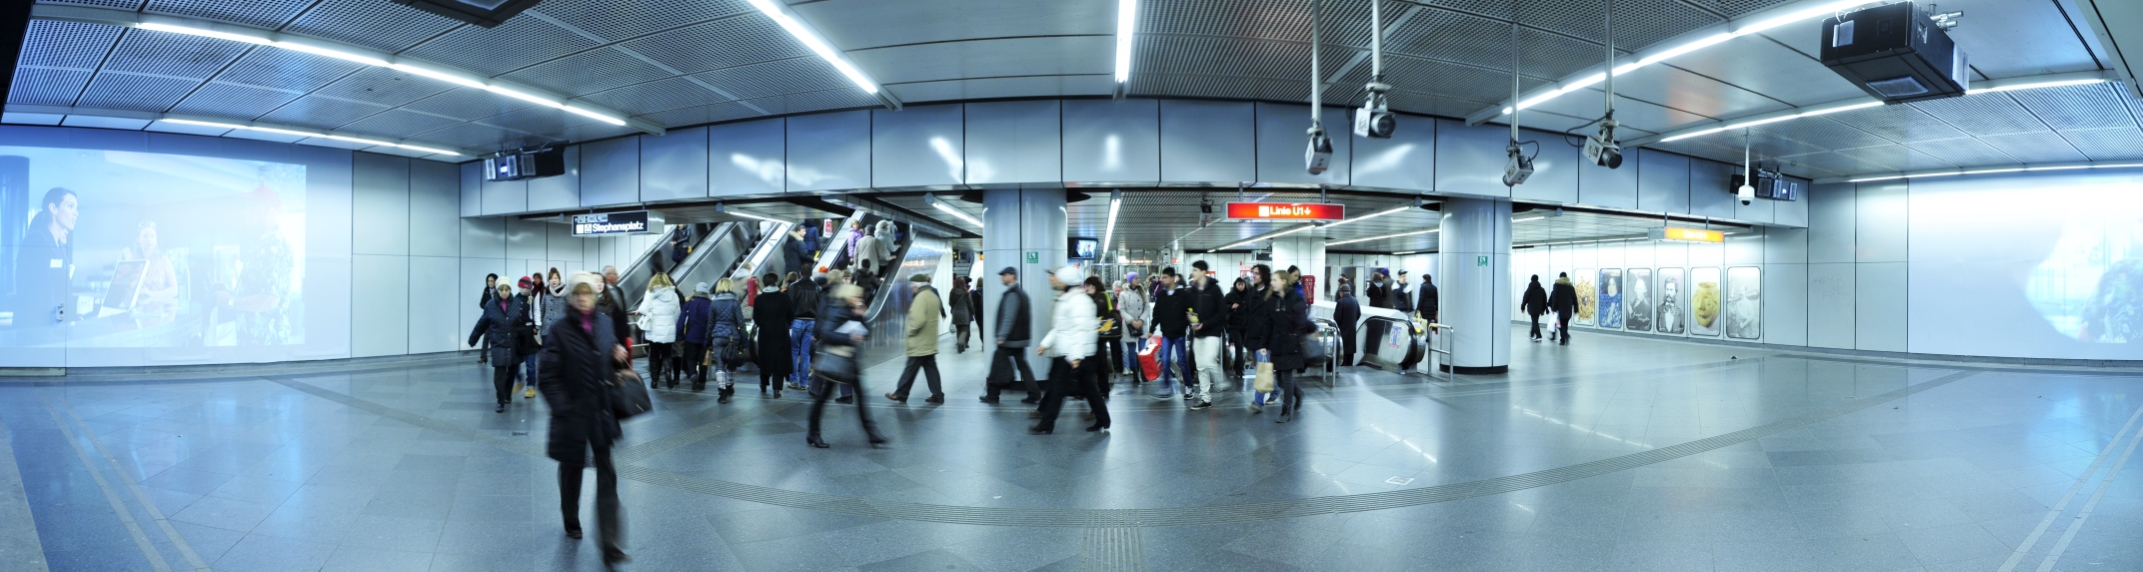 Fahrgäste in der Station Stephansplatz. Fotomontage.